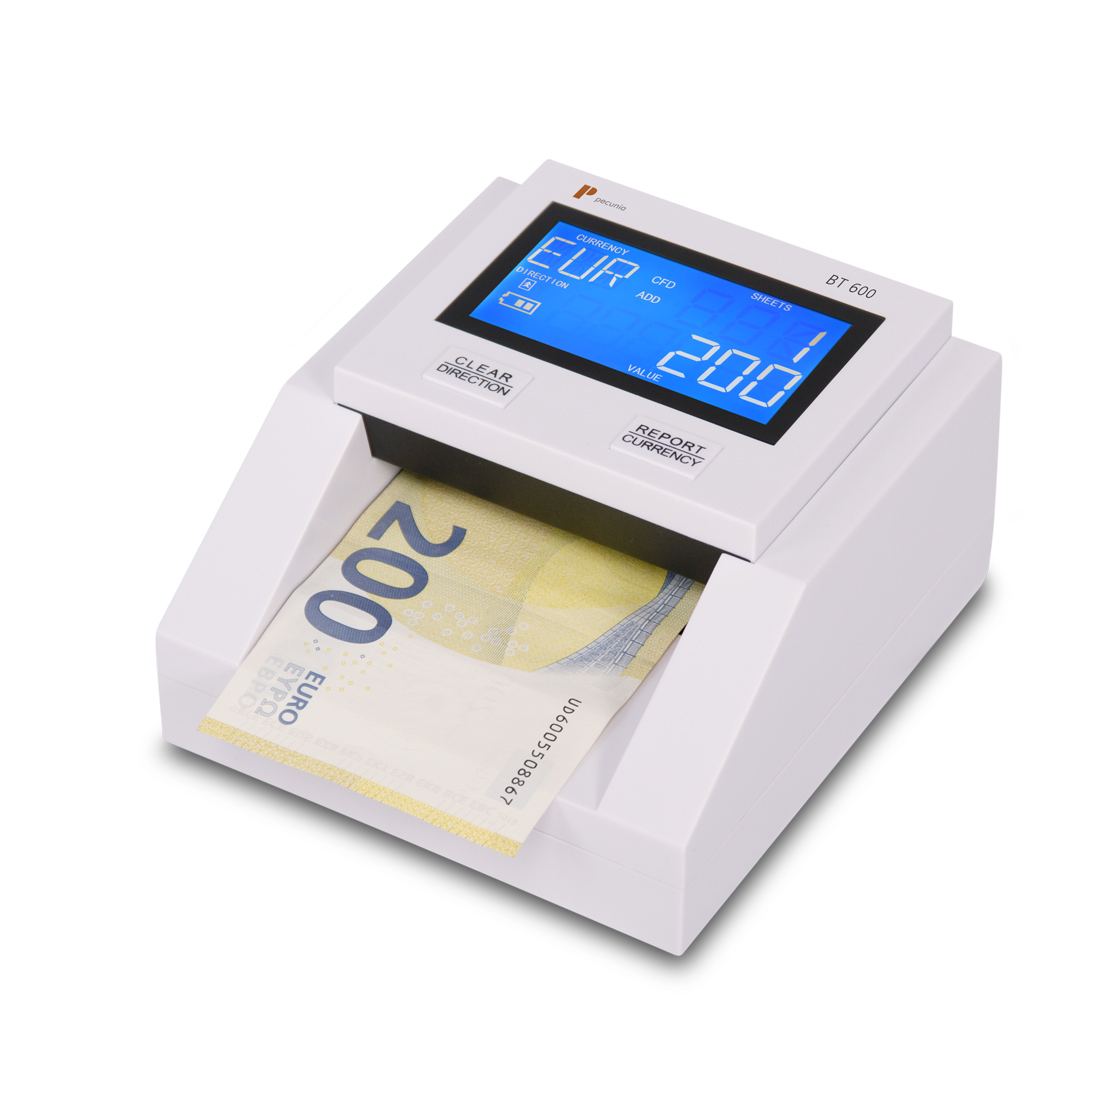 Counterfeit detector Pecunia BT 600